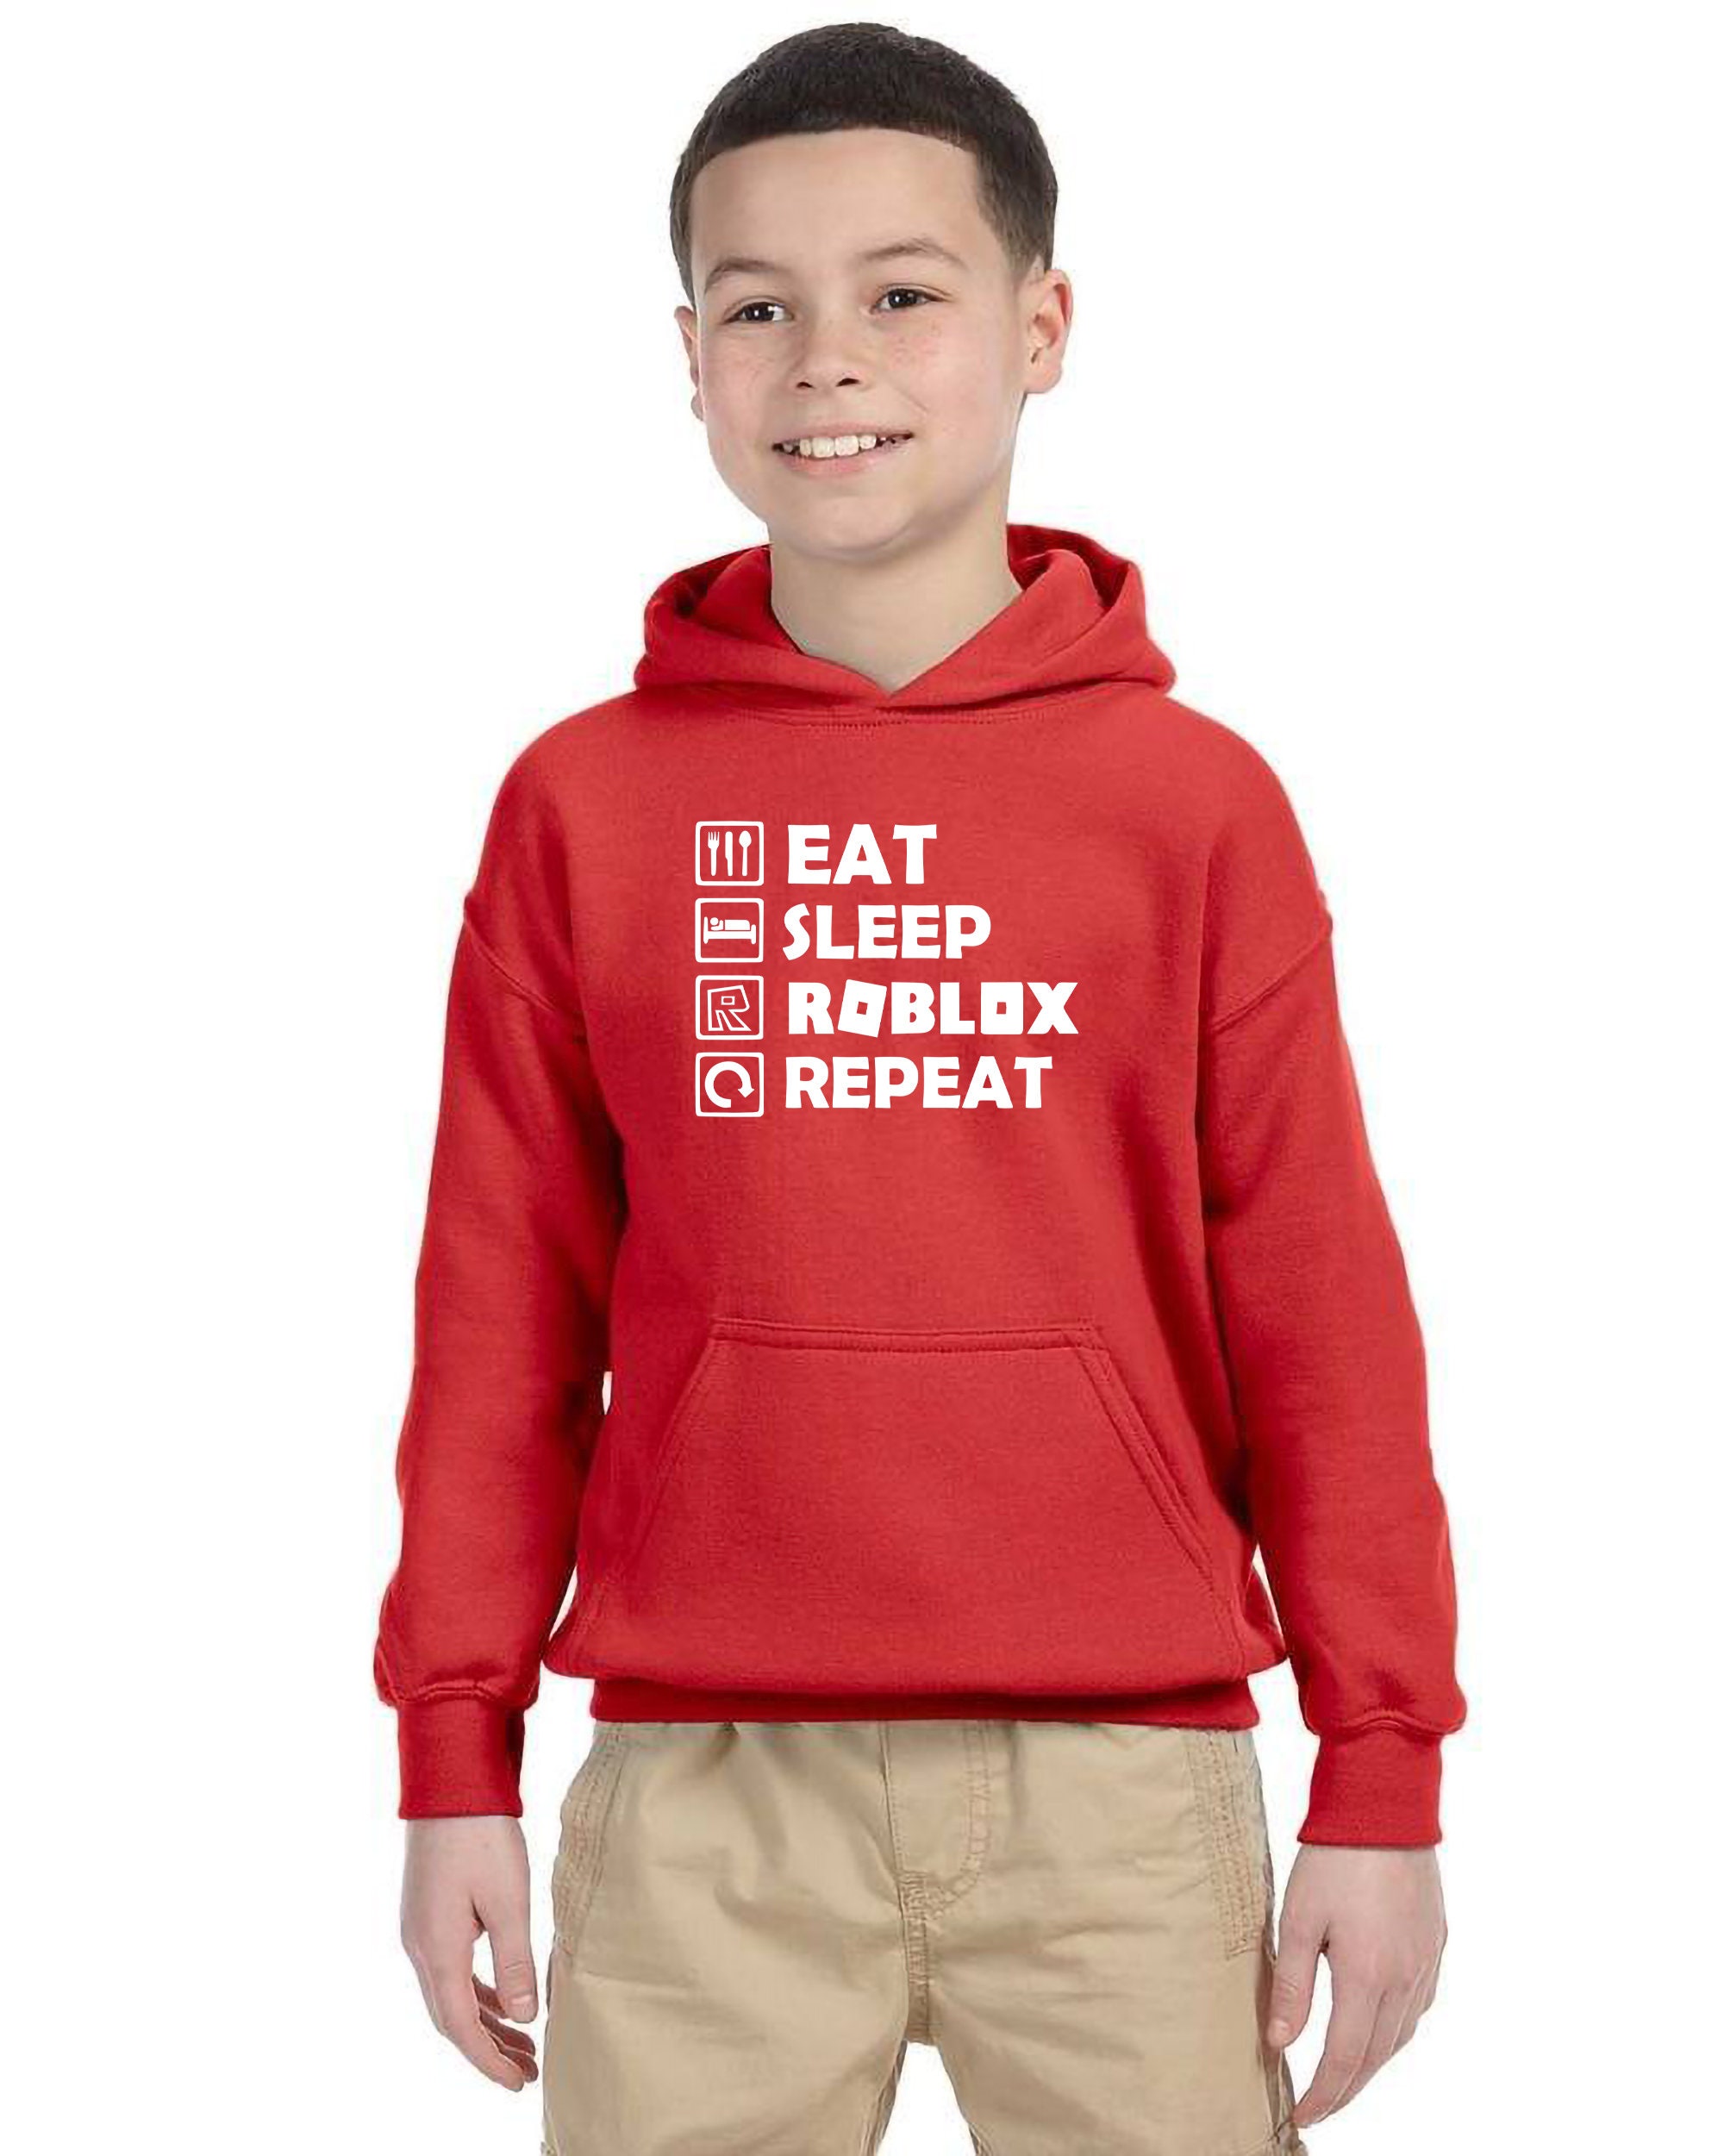 Roblox Gamer Design Sweatshirts, Roblox shirt, Roblox Gift, Birthday Gift, Roblox Hoodies, eat sleep ROBLOX repeat Hooded Sweatshirt